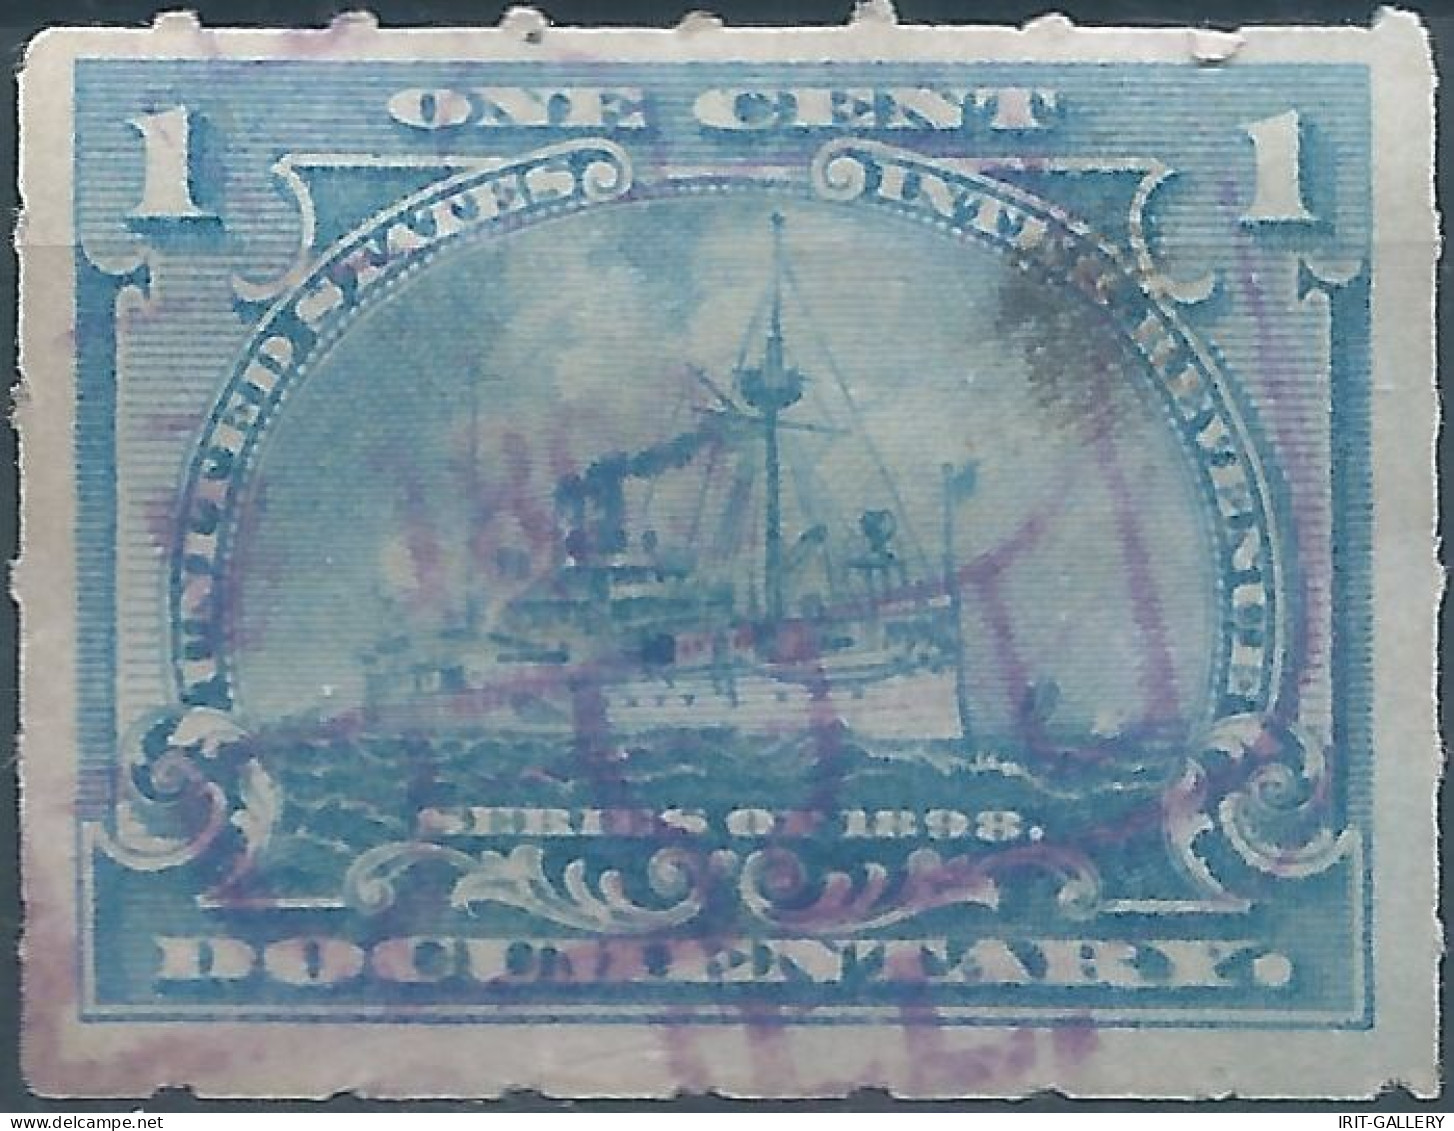 Stati uniti d'america,United States,U.S.A,1898 Revenue stamps Internal  DOCUMENTARY,1cent,Used